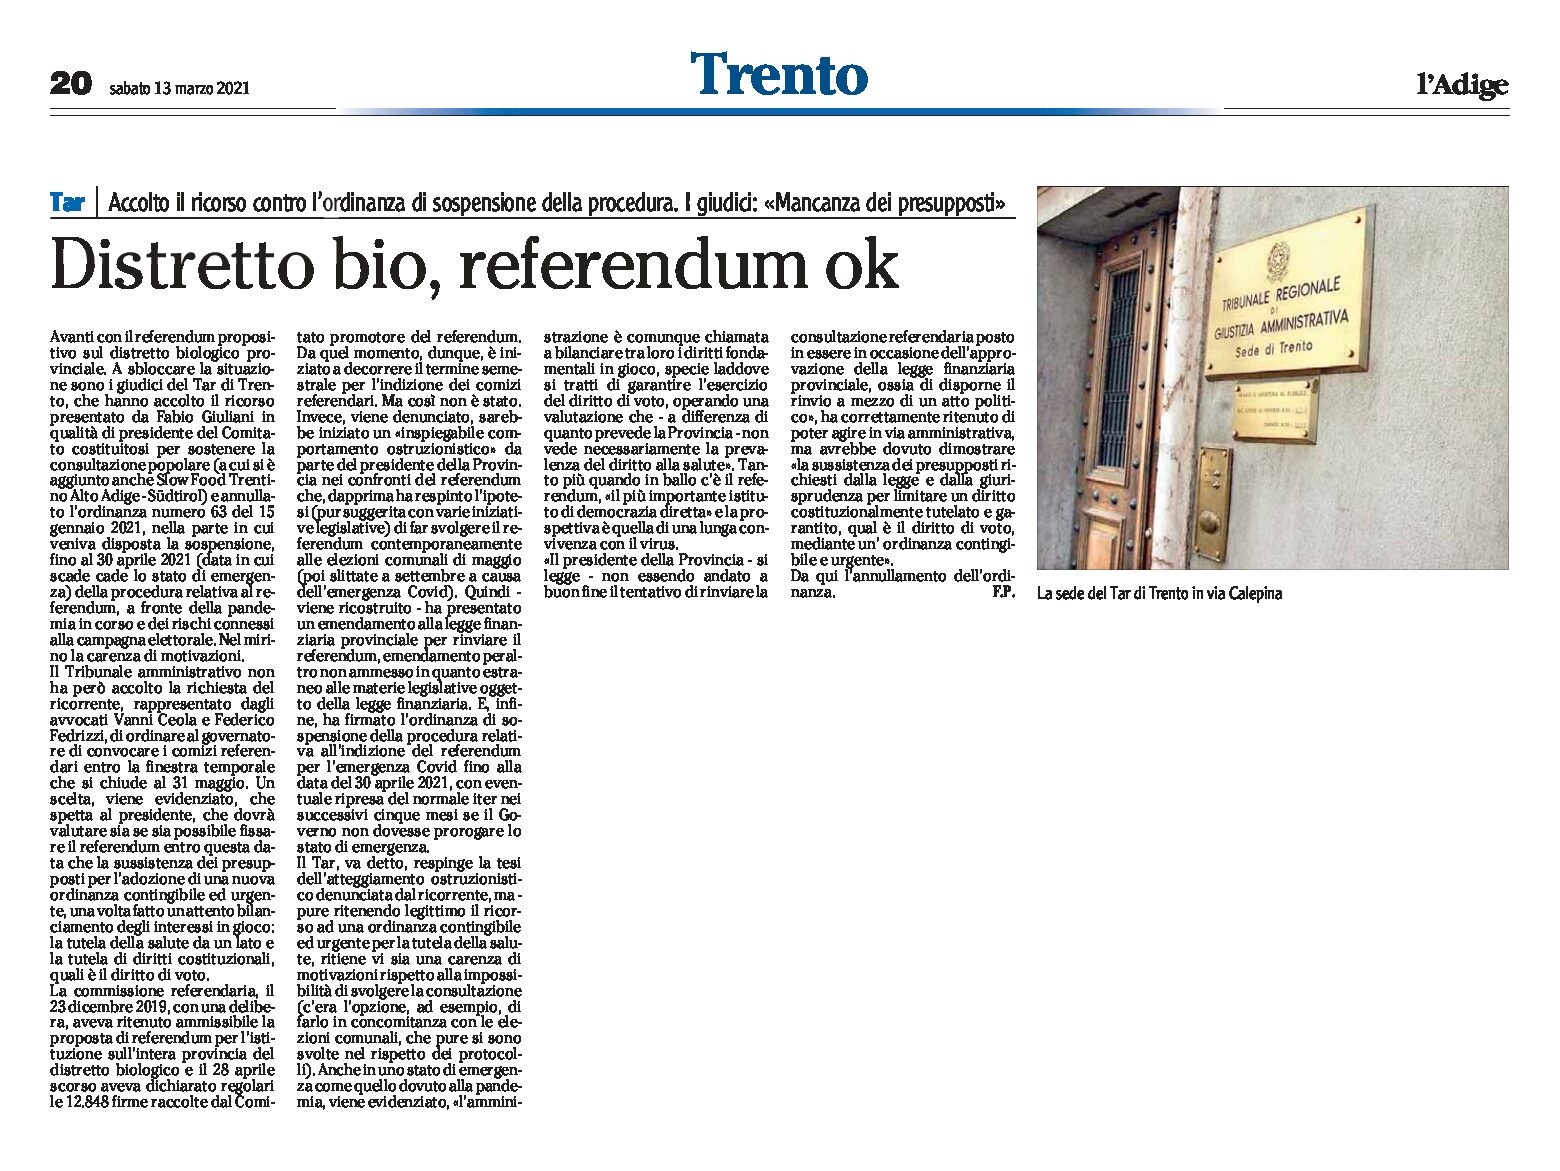 Trentino: distretto bio, referendum ok